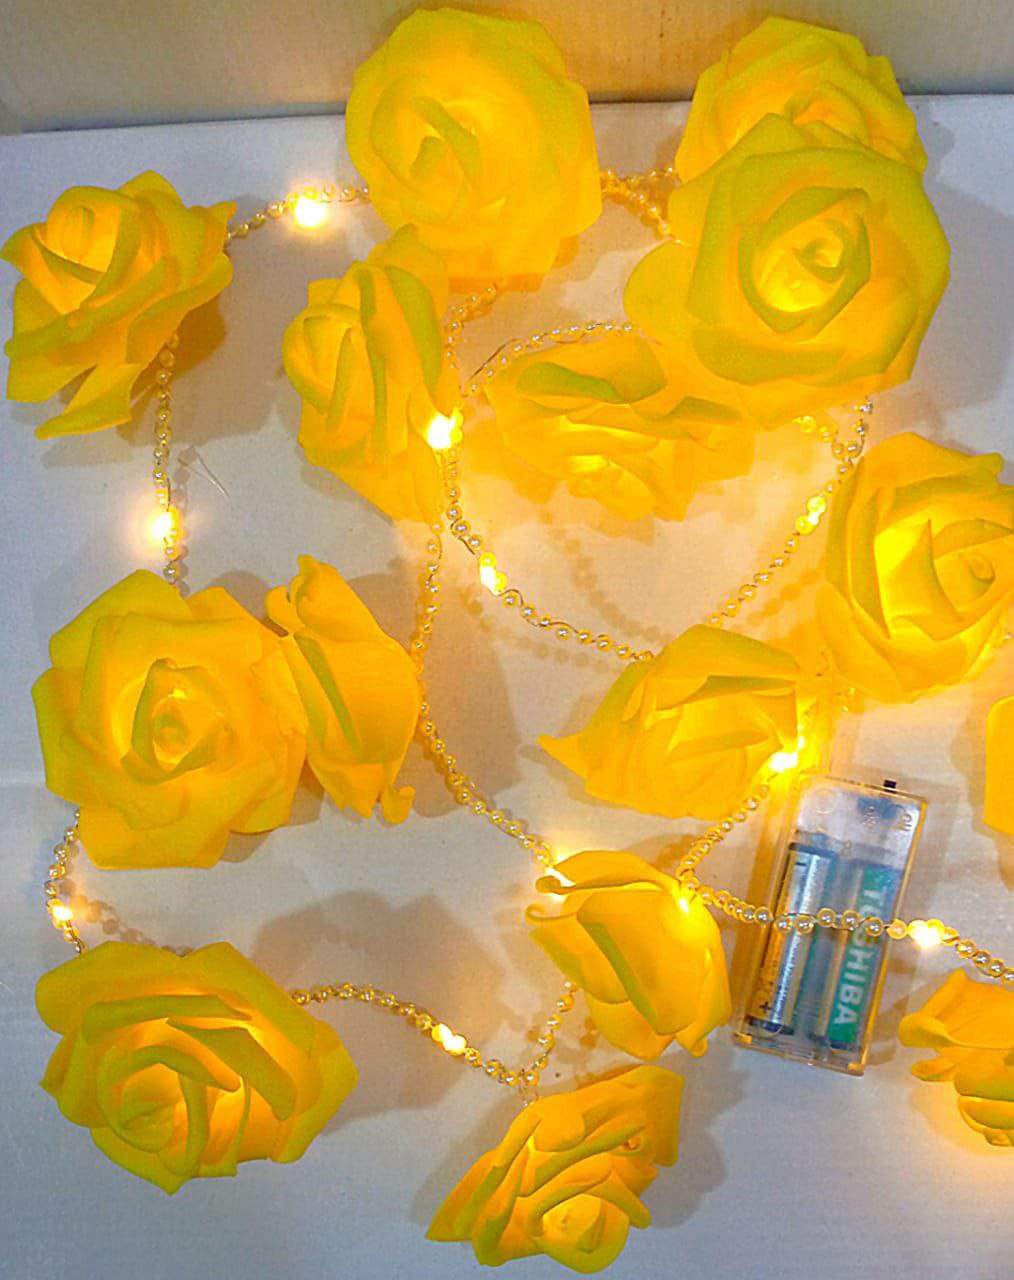 15 Flower fairy lights with Pearl’s string onestopbazaar